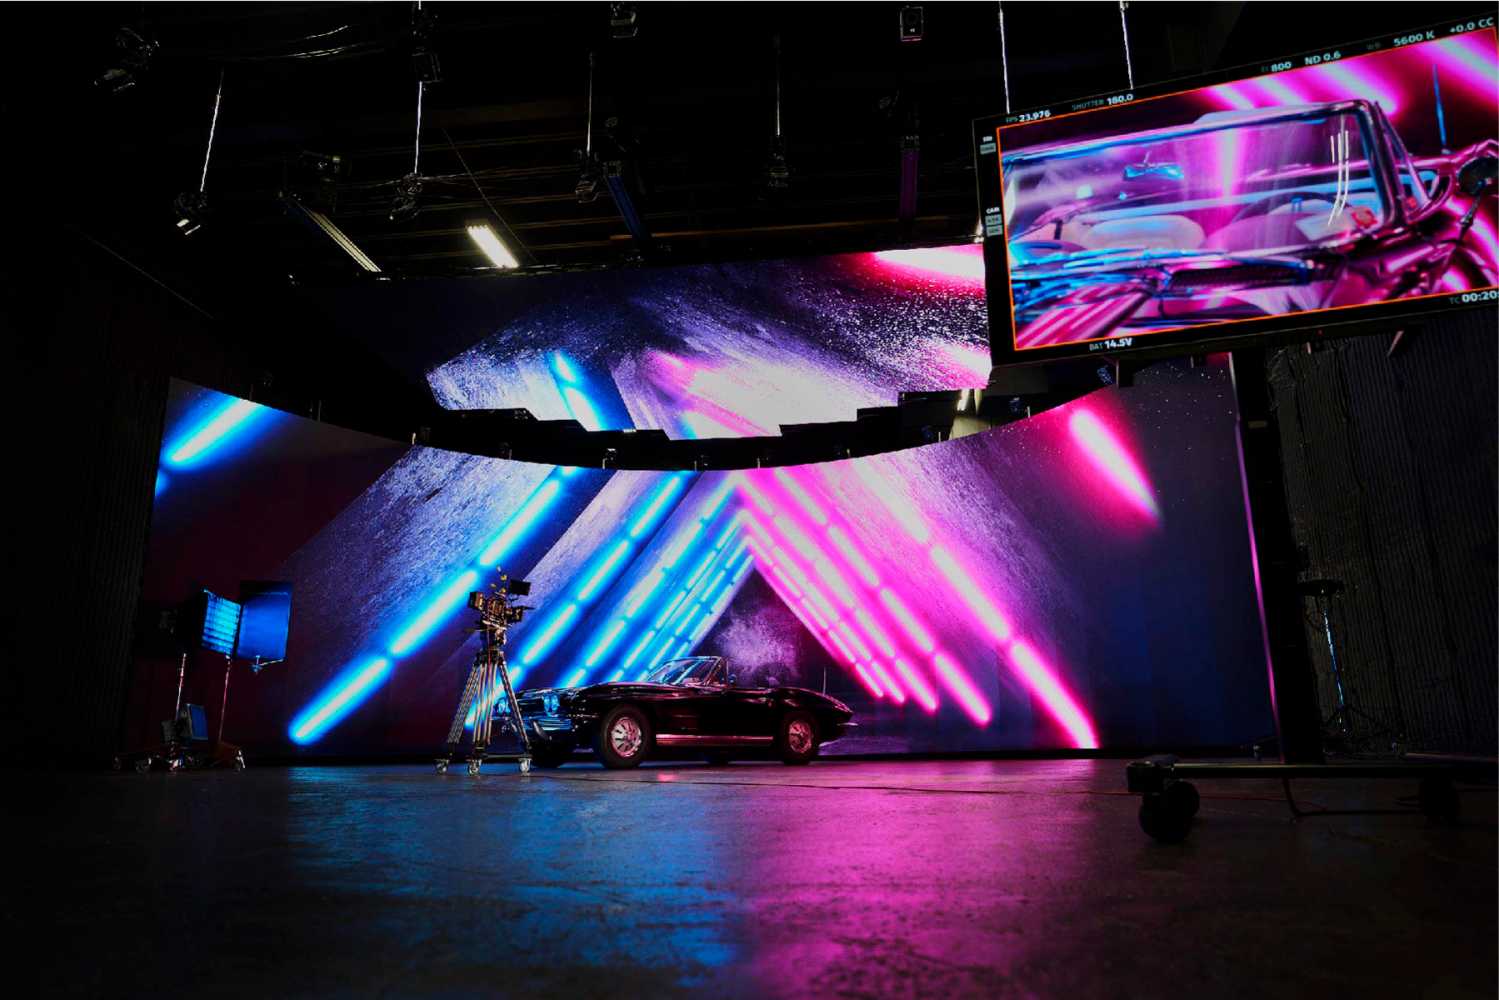 GUM Studios - The virtual environment includes ROE Visual Black Pearl 2 LED video panels driven by Brompton 4K Tessera SX40 (photo: Jackie Roman)